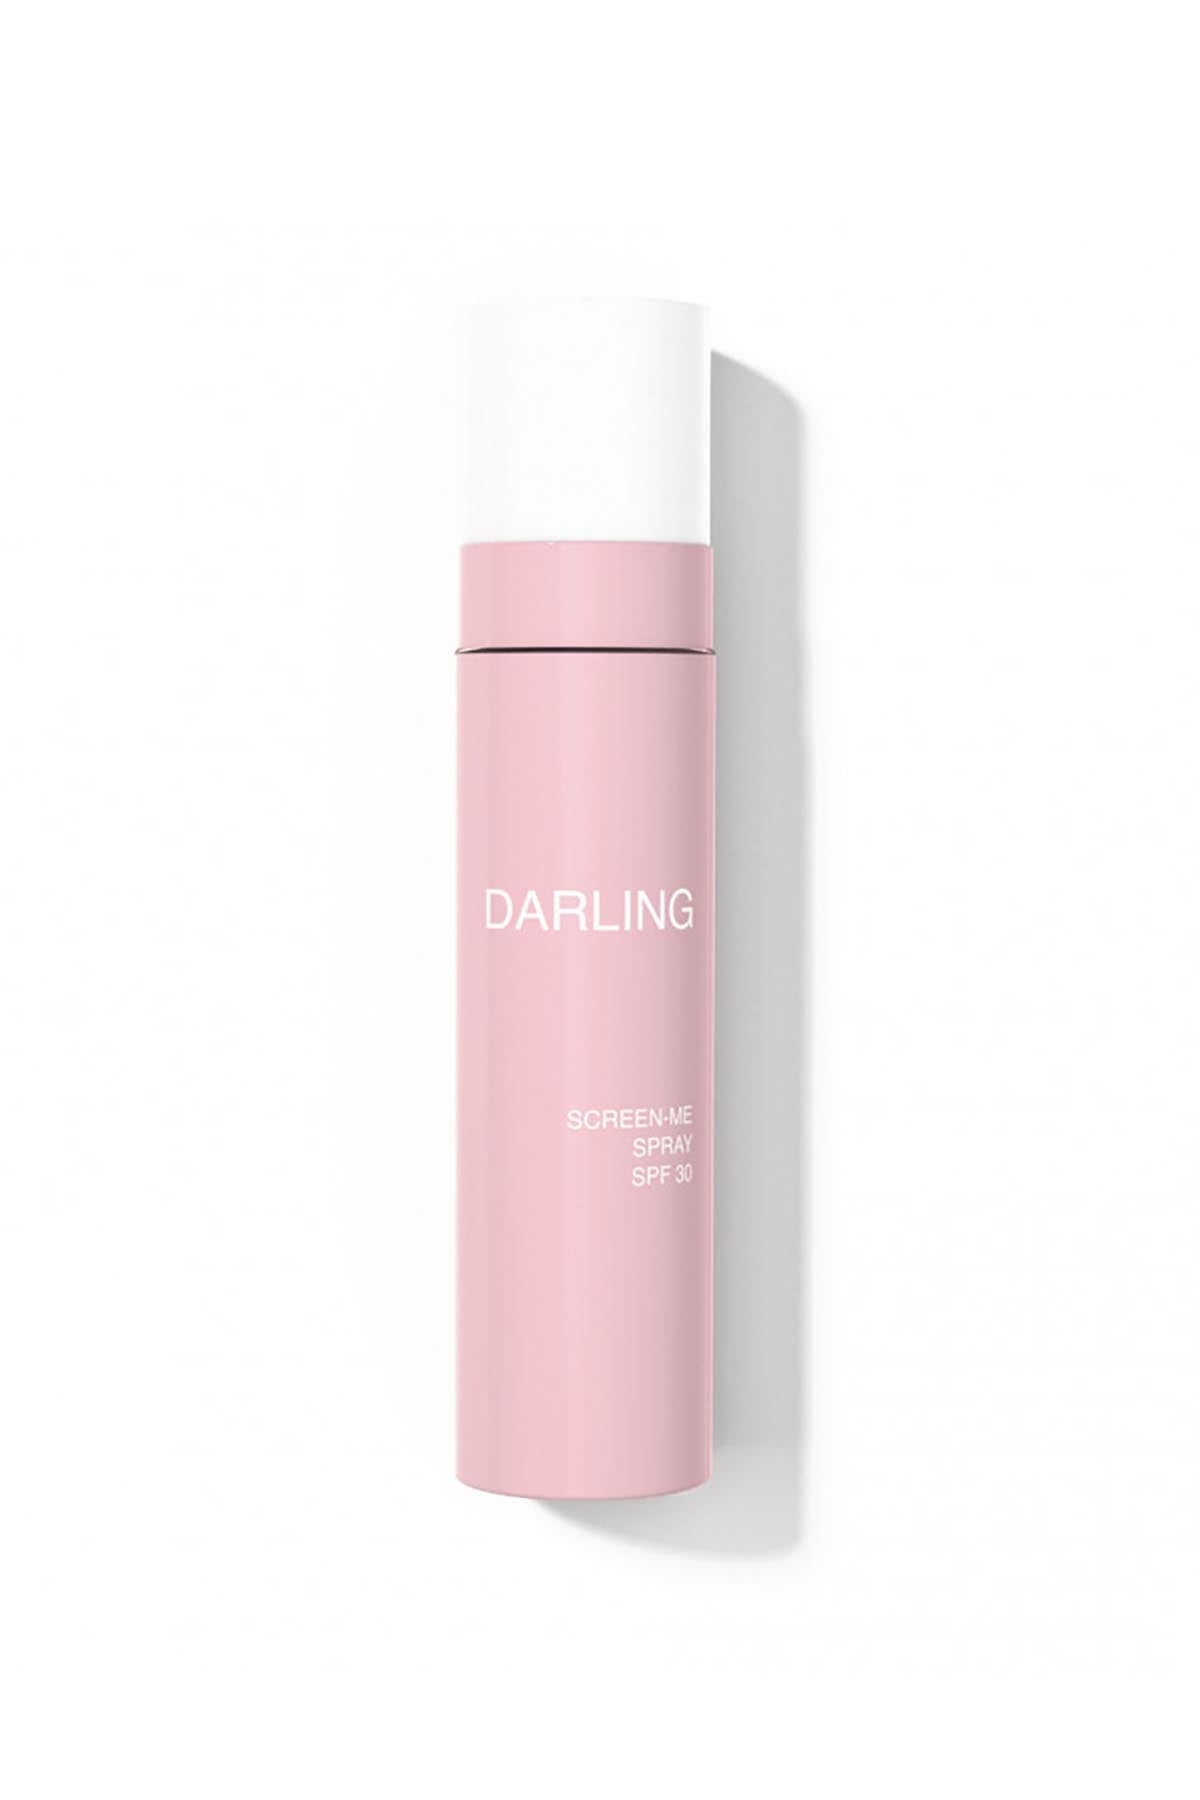 Darling screen-me spray spf 30 - 150 ml-0